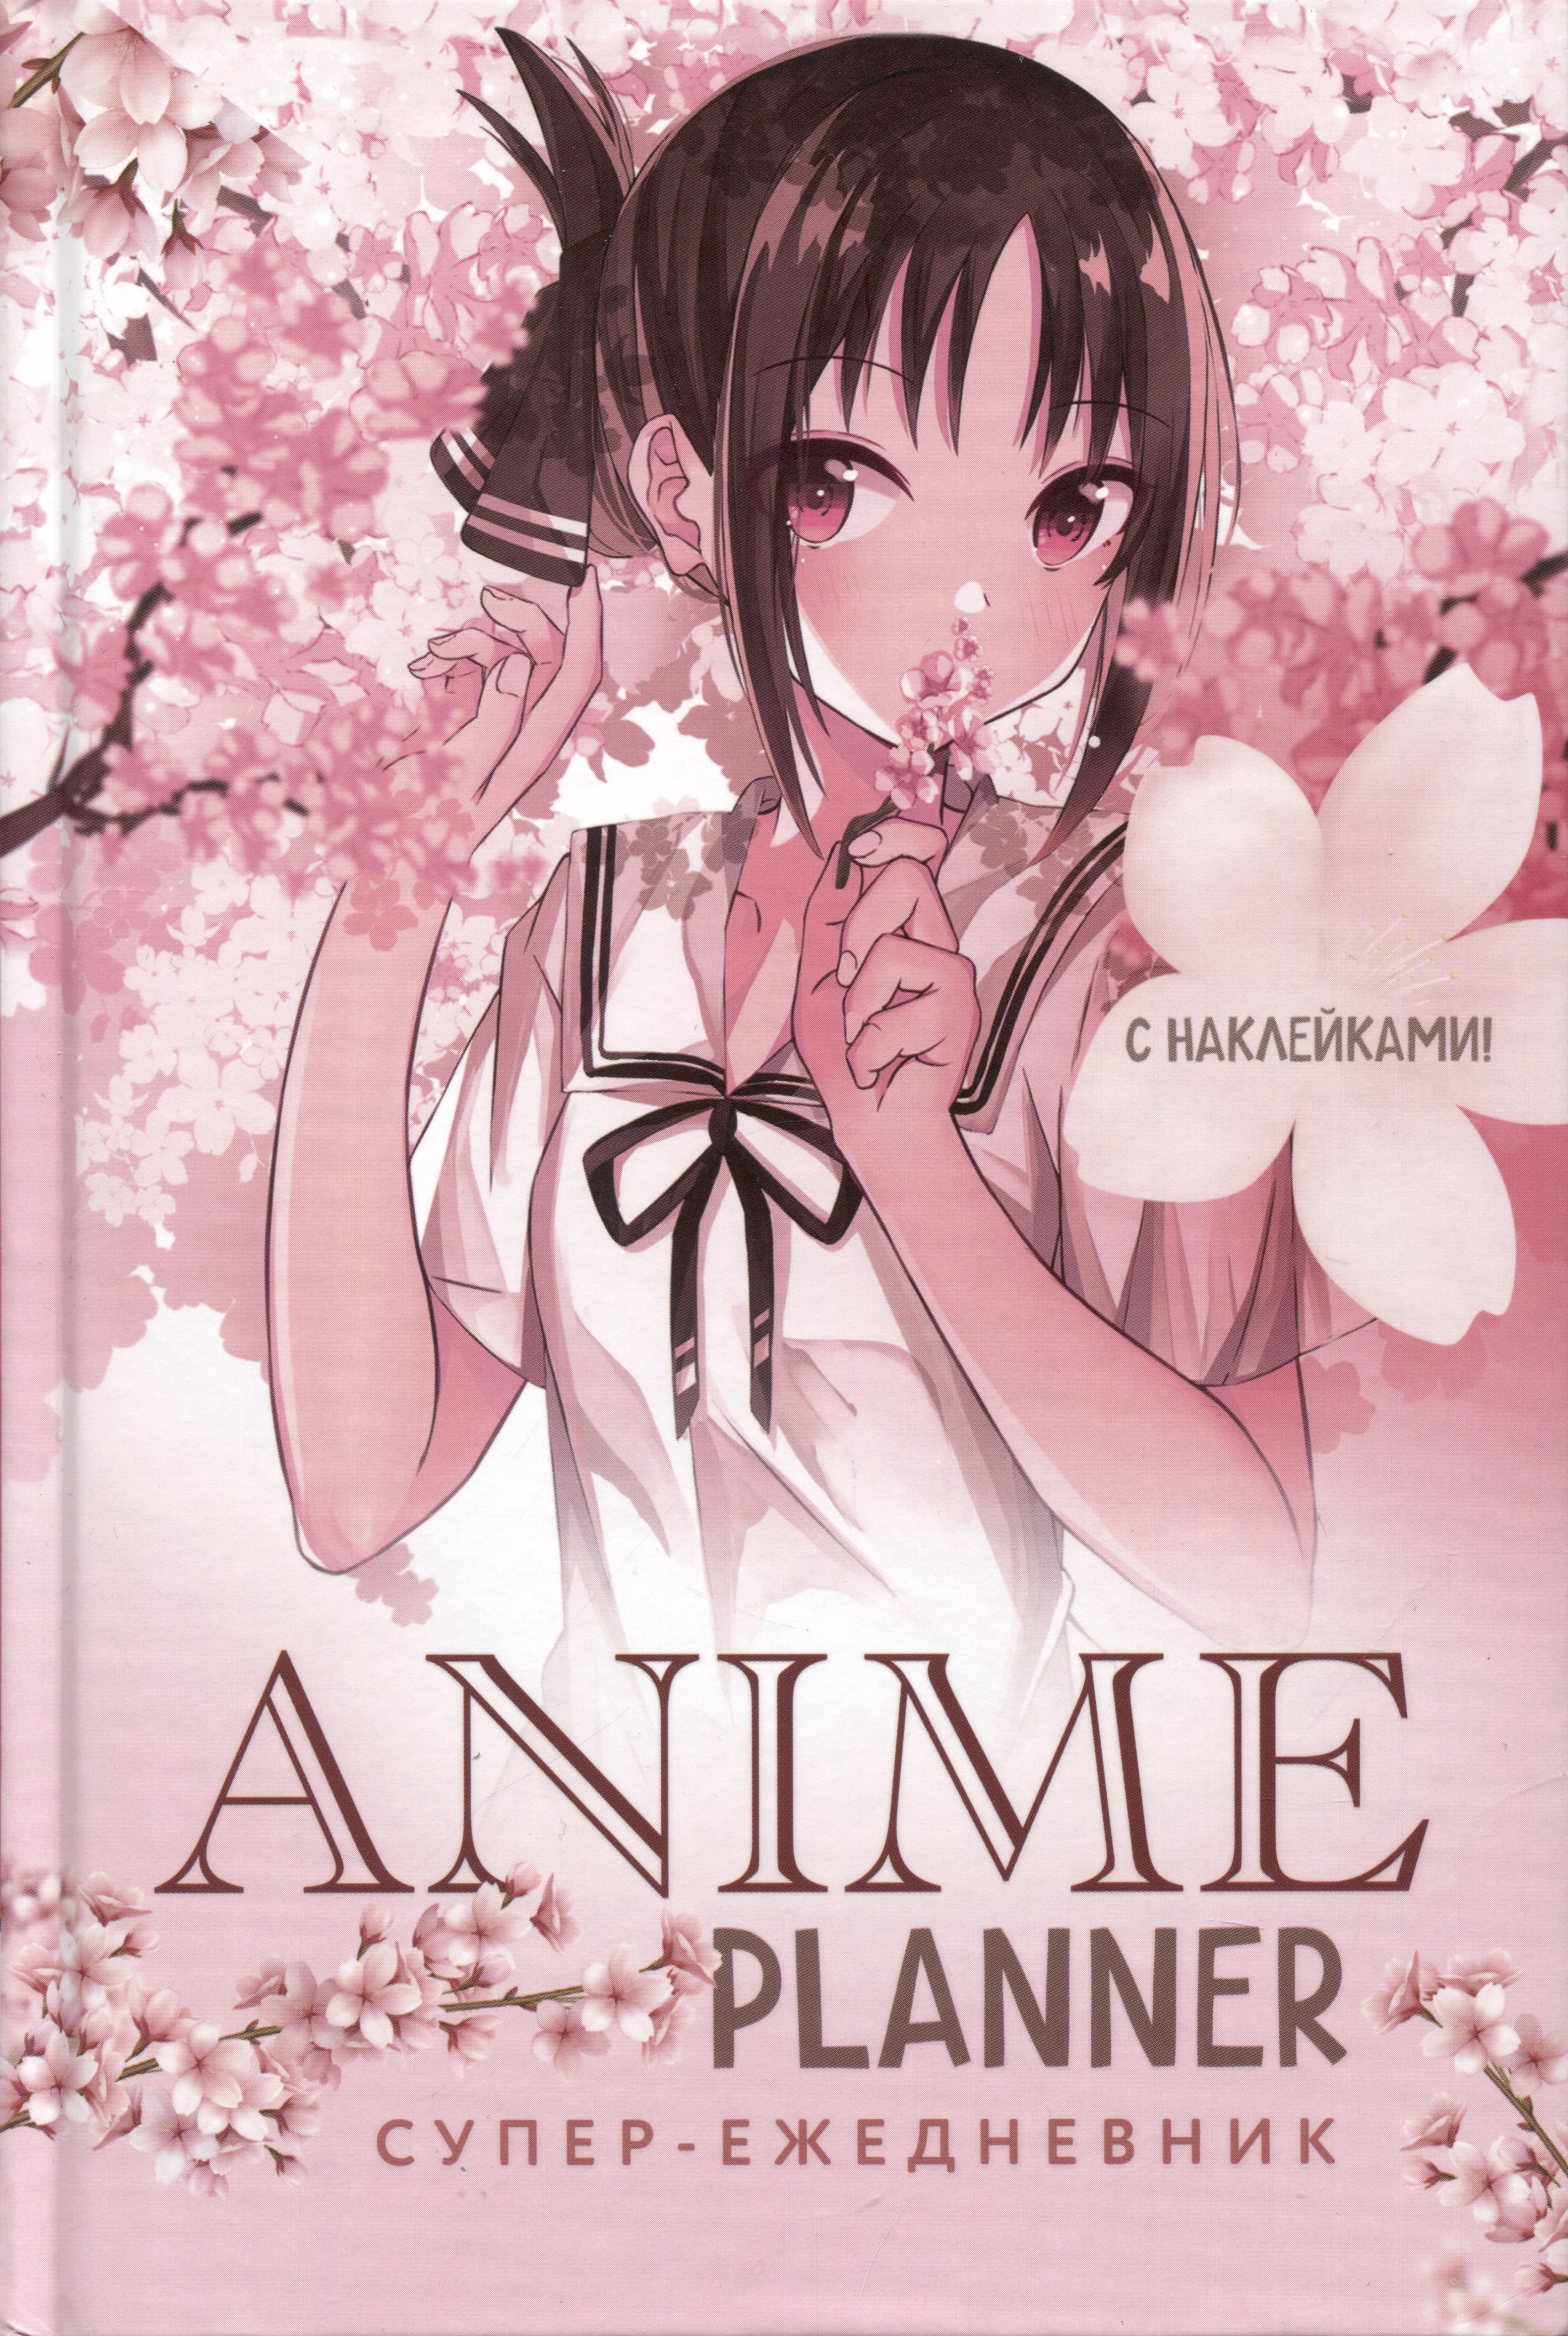  . 5 64  Anime Planner (  )  